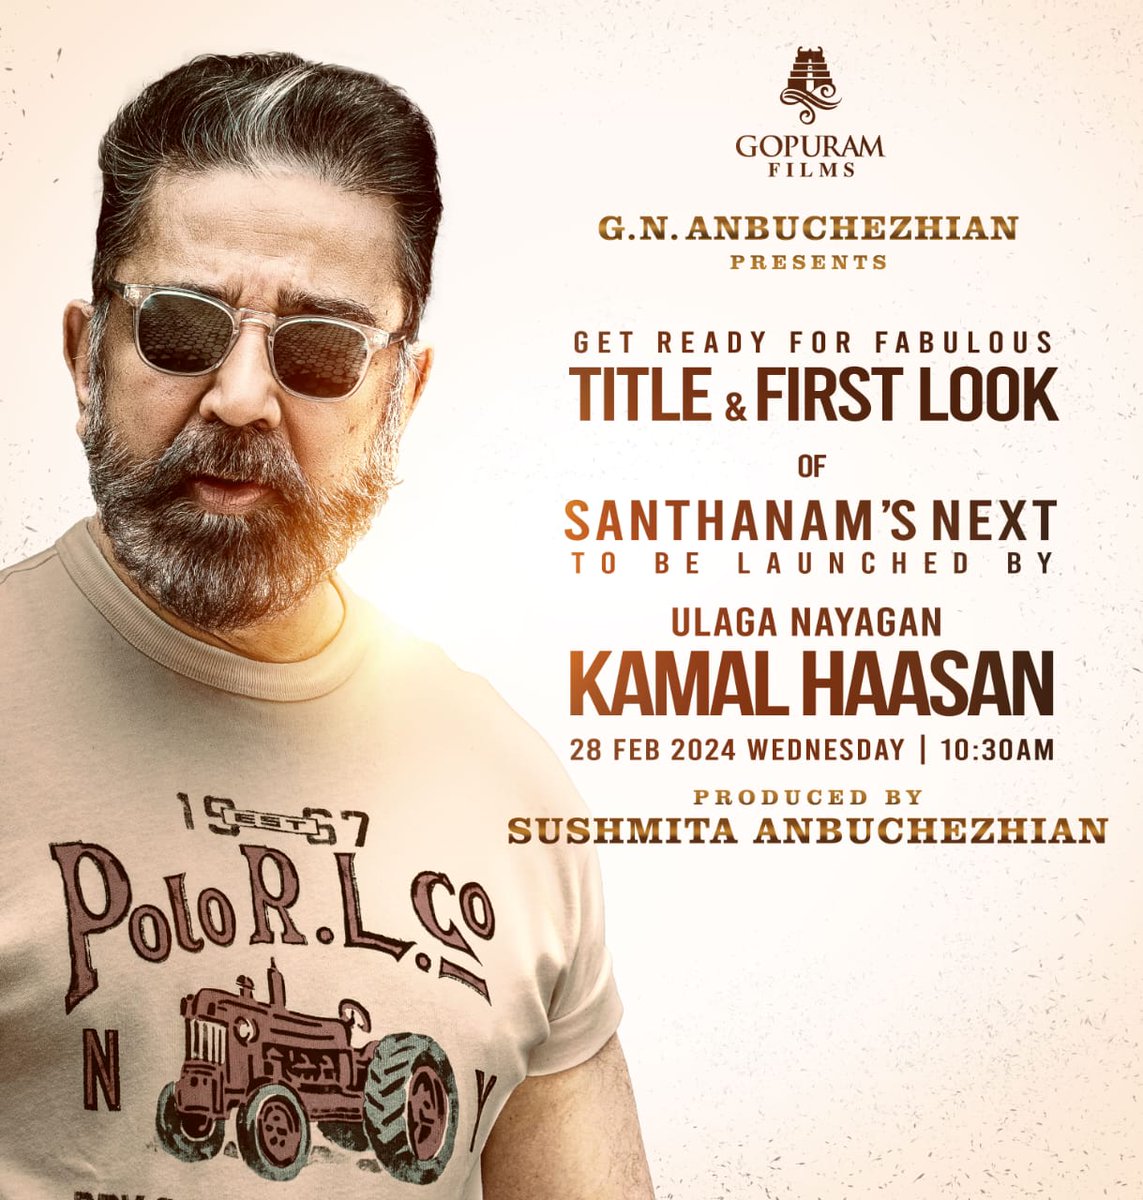 @ikamalhaasan sir will release the Title & First Look of @gopuramfilms #ProdNo5 Tomorrow(28th Feb) at 10:30AM🕥

Presented by #GNAnbuchezhian Sir, Produced by #SushmitaAnbuchezhian, Starring @iamsanthanam & @Priyalaya_ubd directed by @dirnanand

@Gopuram_Cinemas #ThambiRamaiah